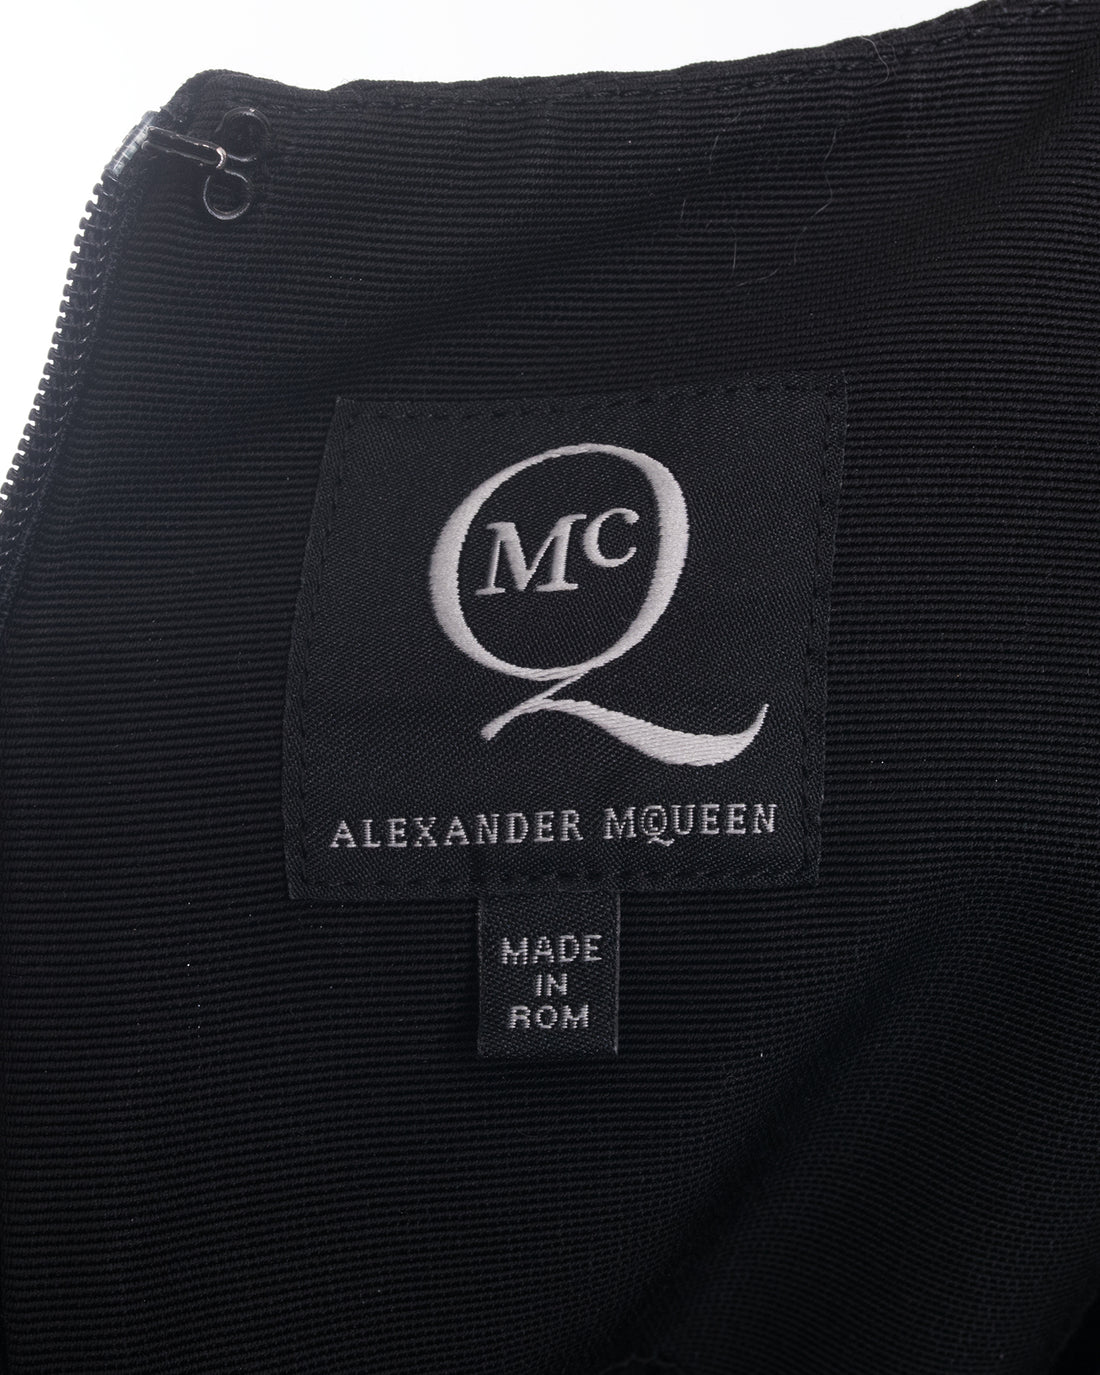 McQ Alexander McQueen Black Sleeveless Flare Skirt Dress - 6